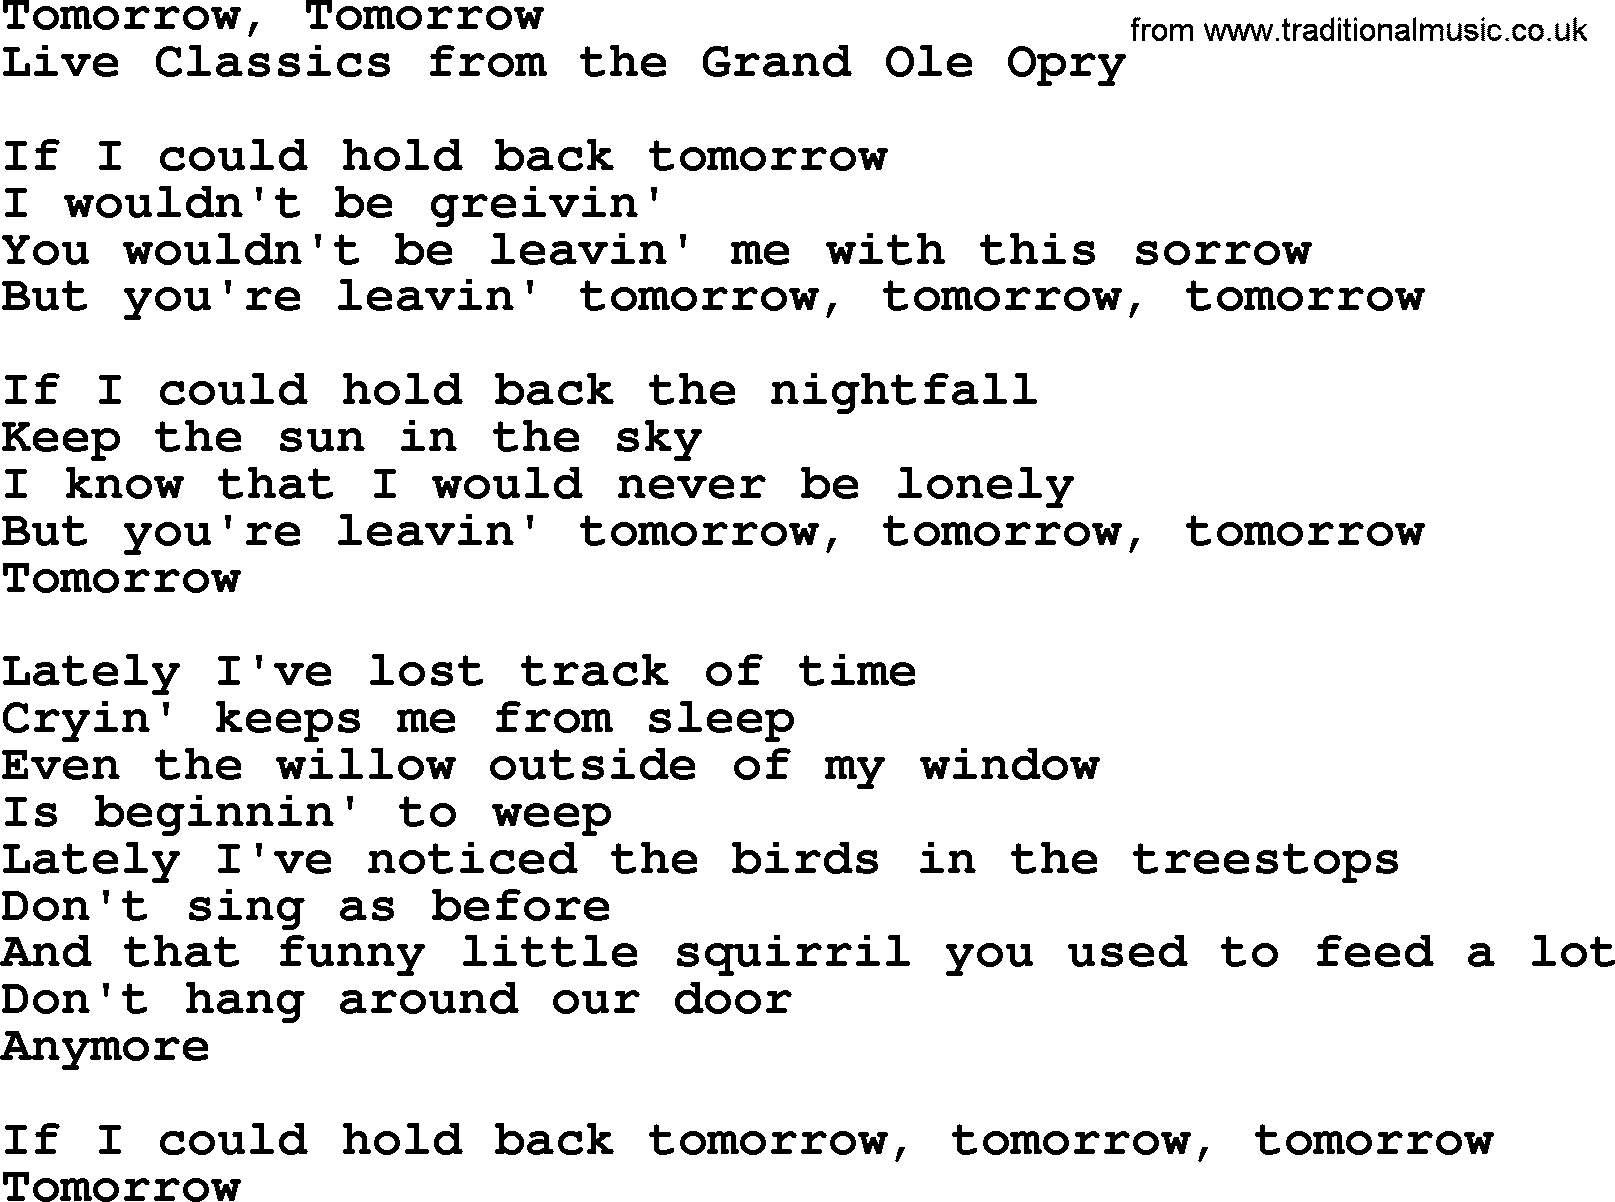 Marty Robbins song: Tomorrow Tomorrow, lyrics